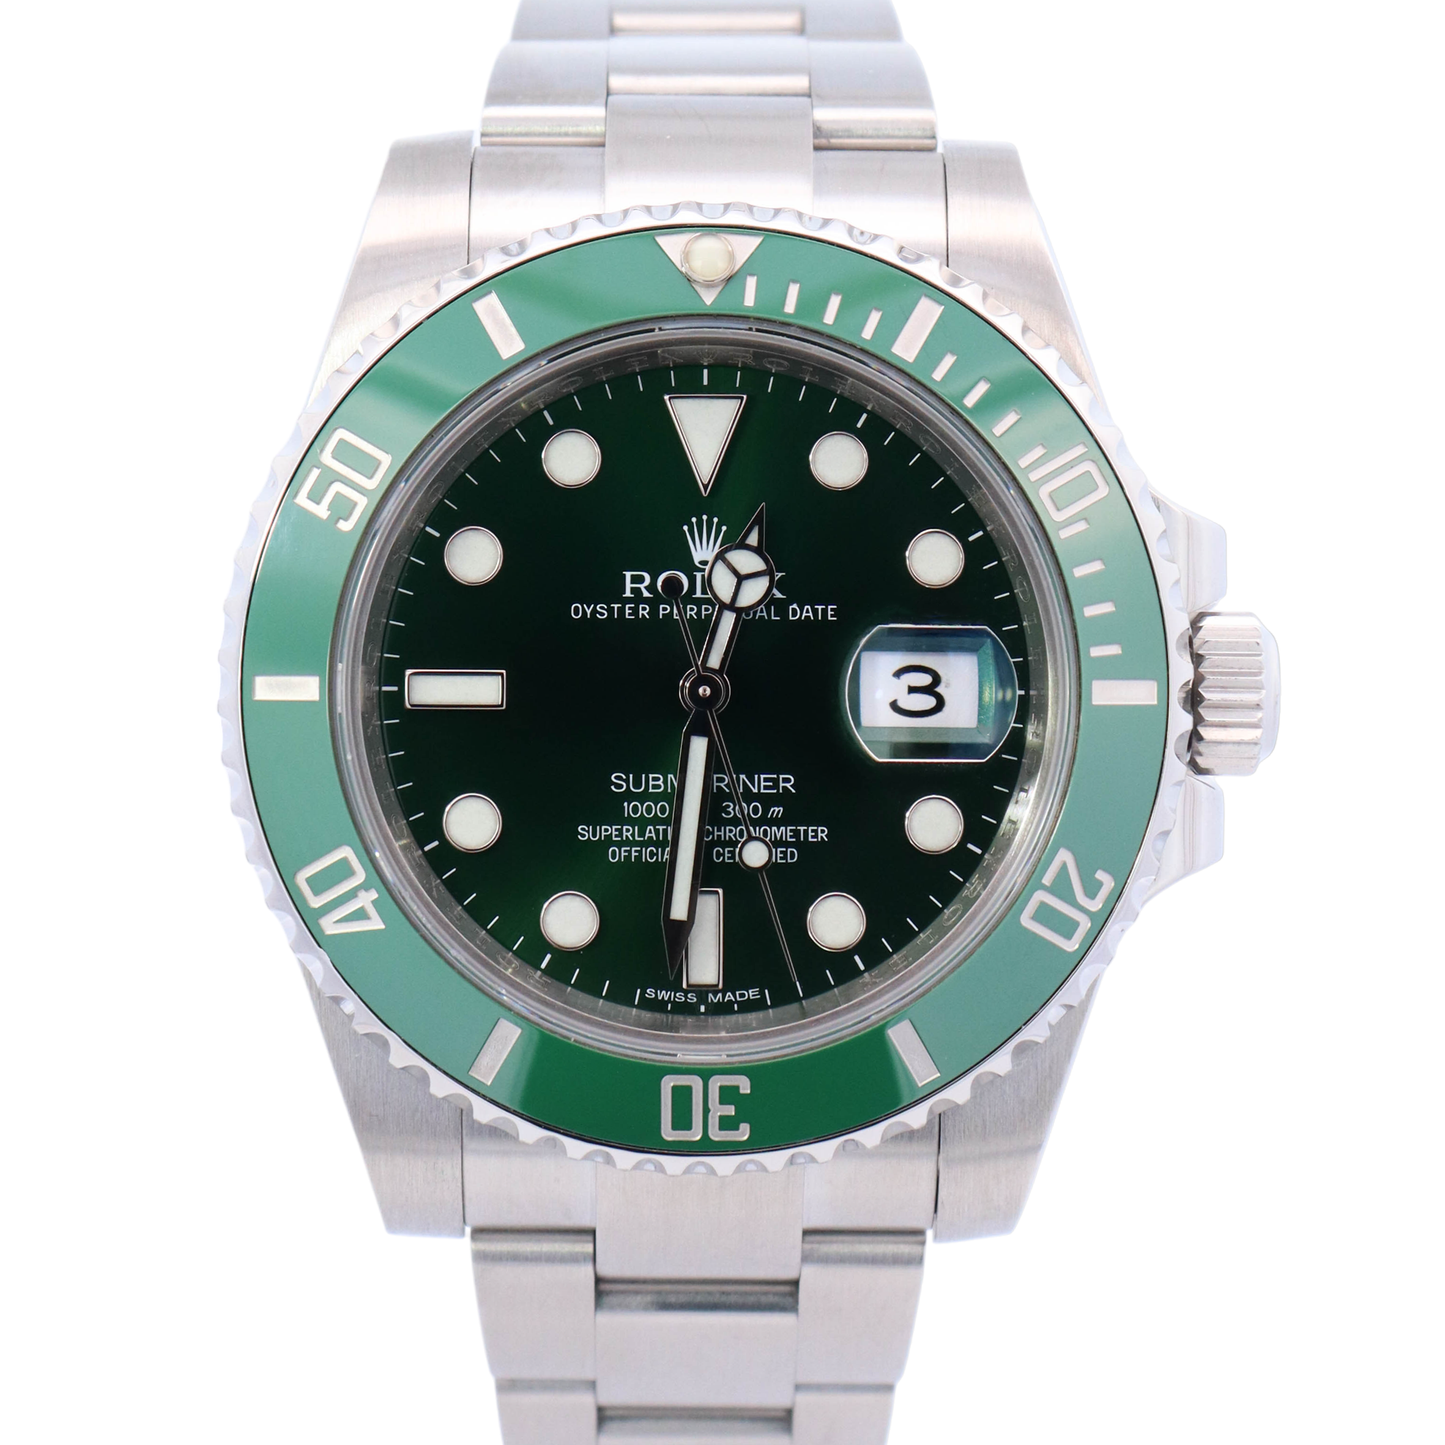 Hulk' Submariner, Ref. 116610 Stainless steel wristwatch with date